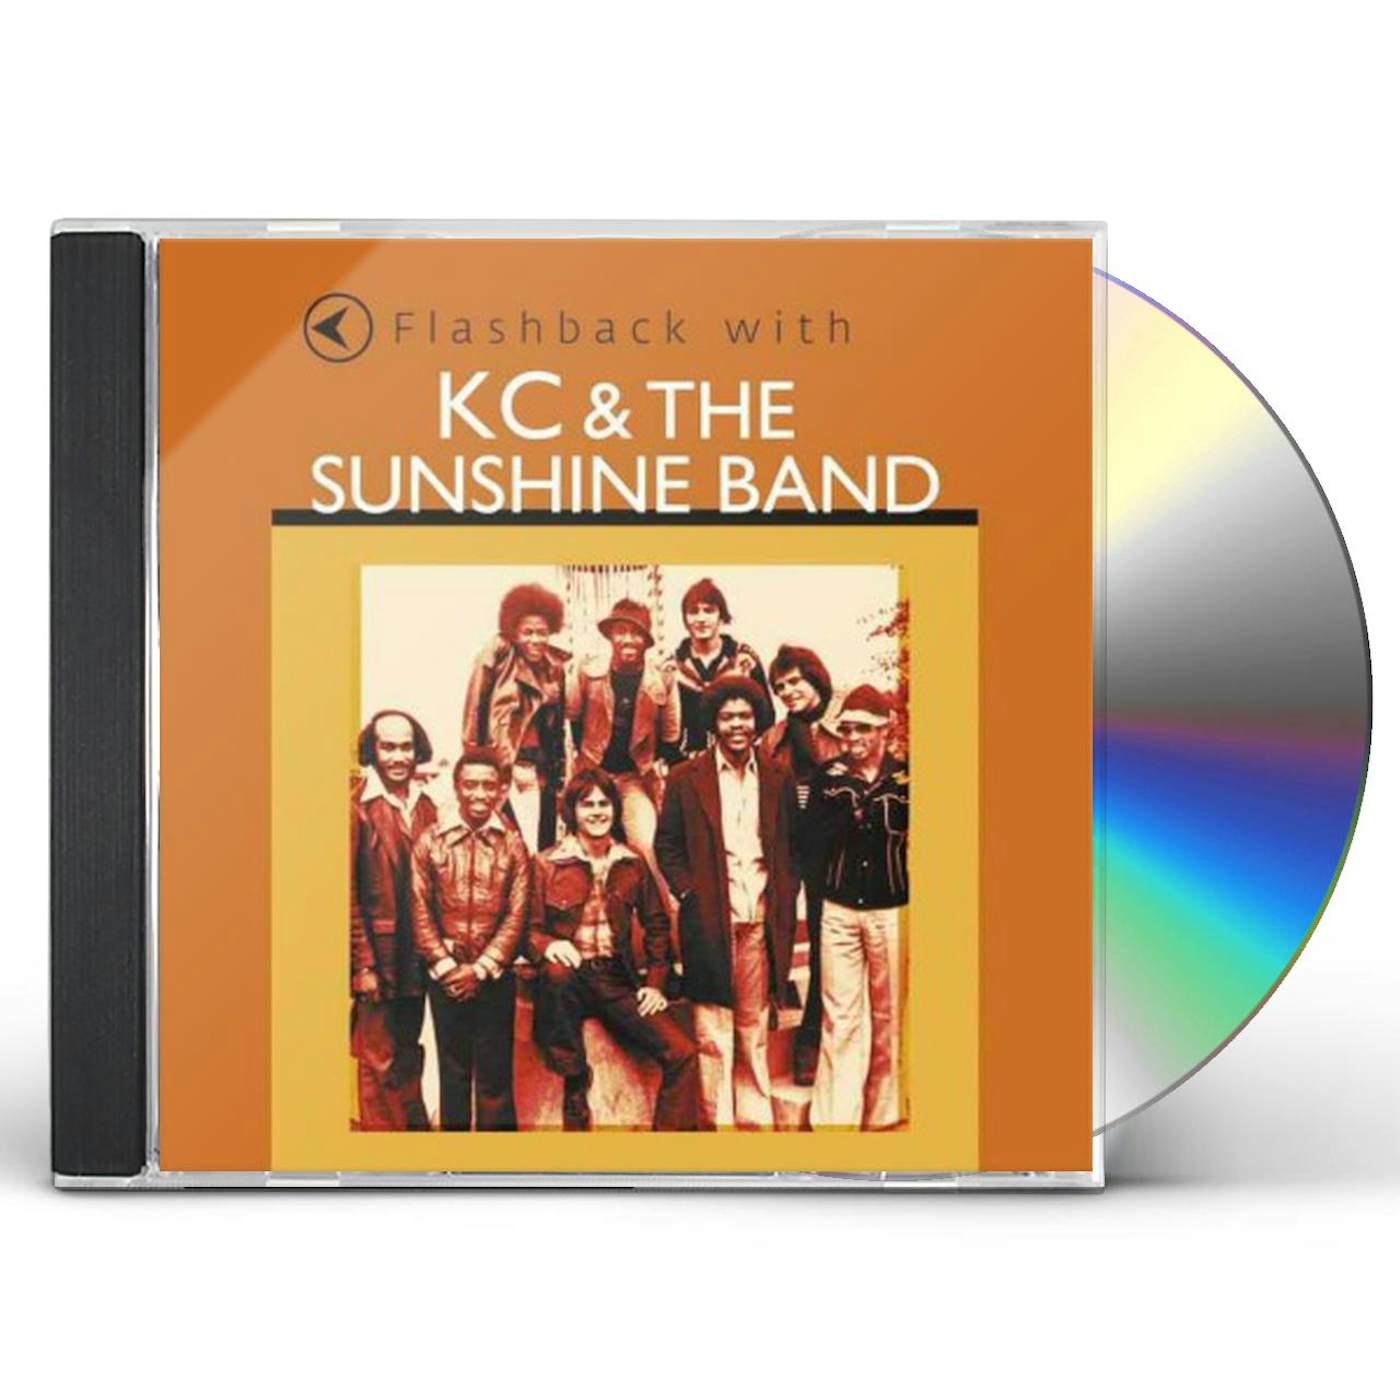 K.C. & SUNSHINE BAND FLASHBACK WITH K.C. & THE SUNSHINE BAND CD